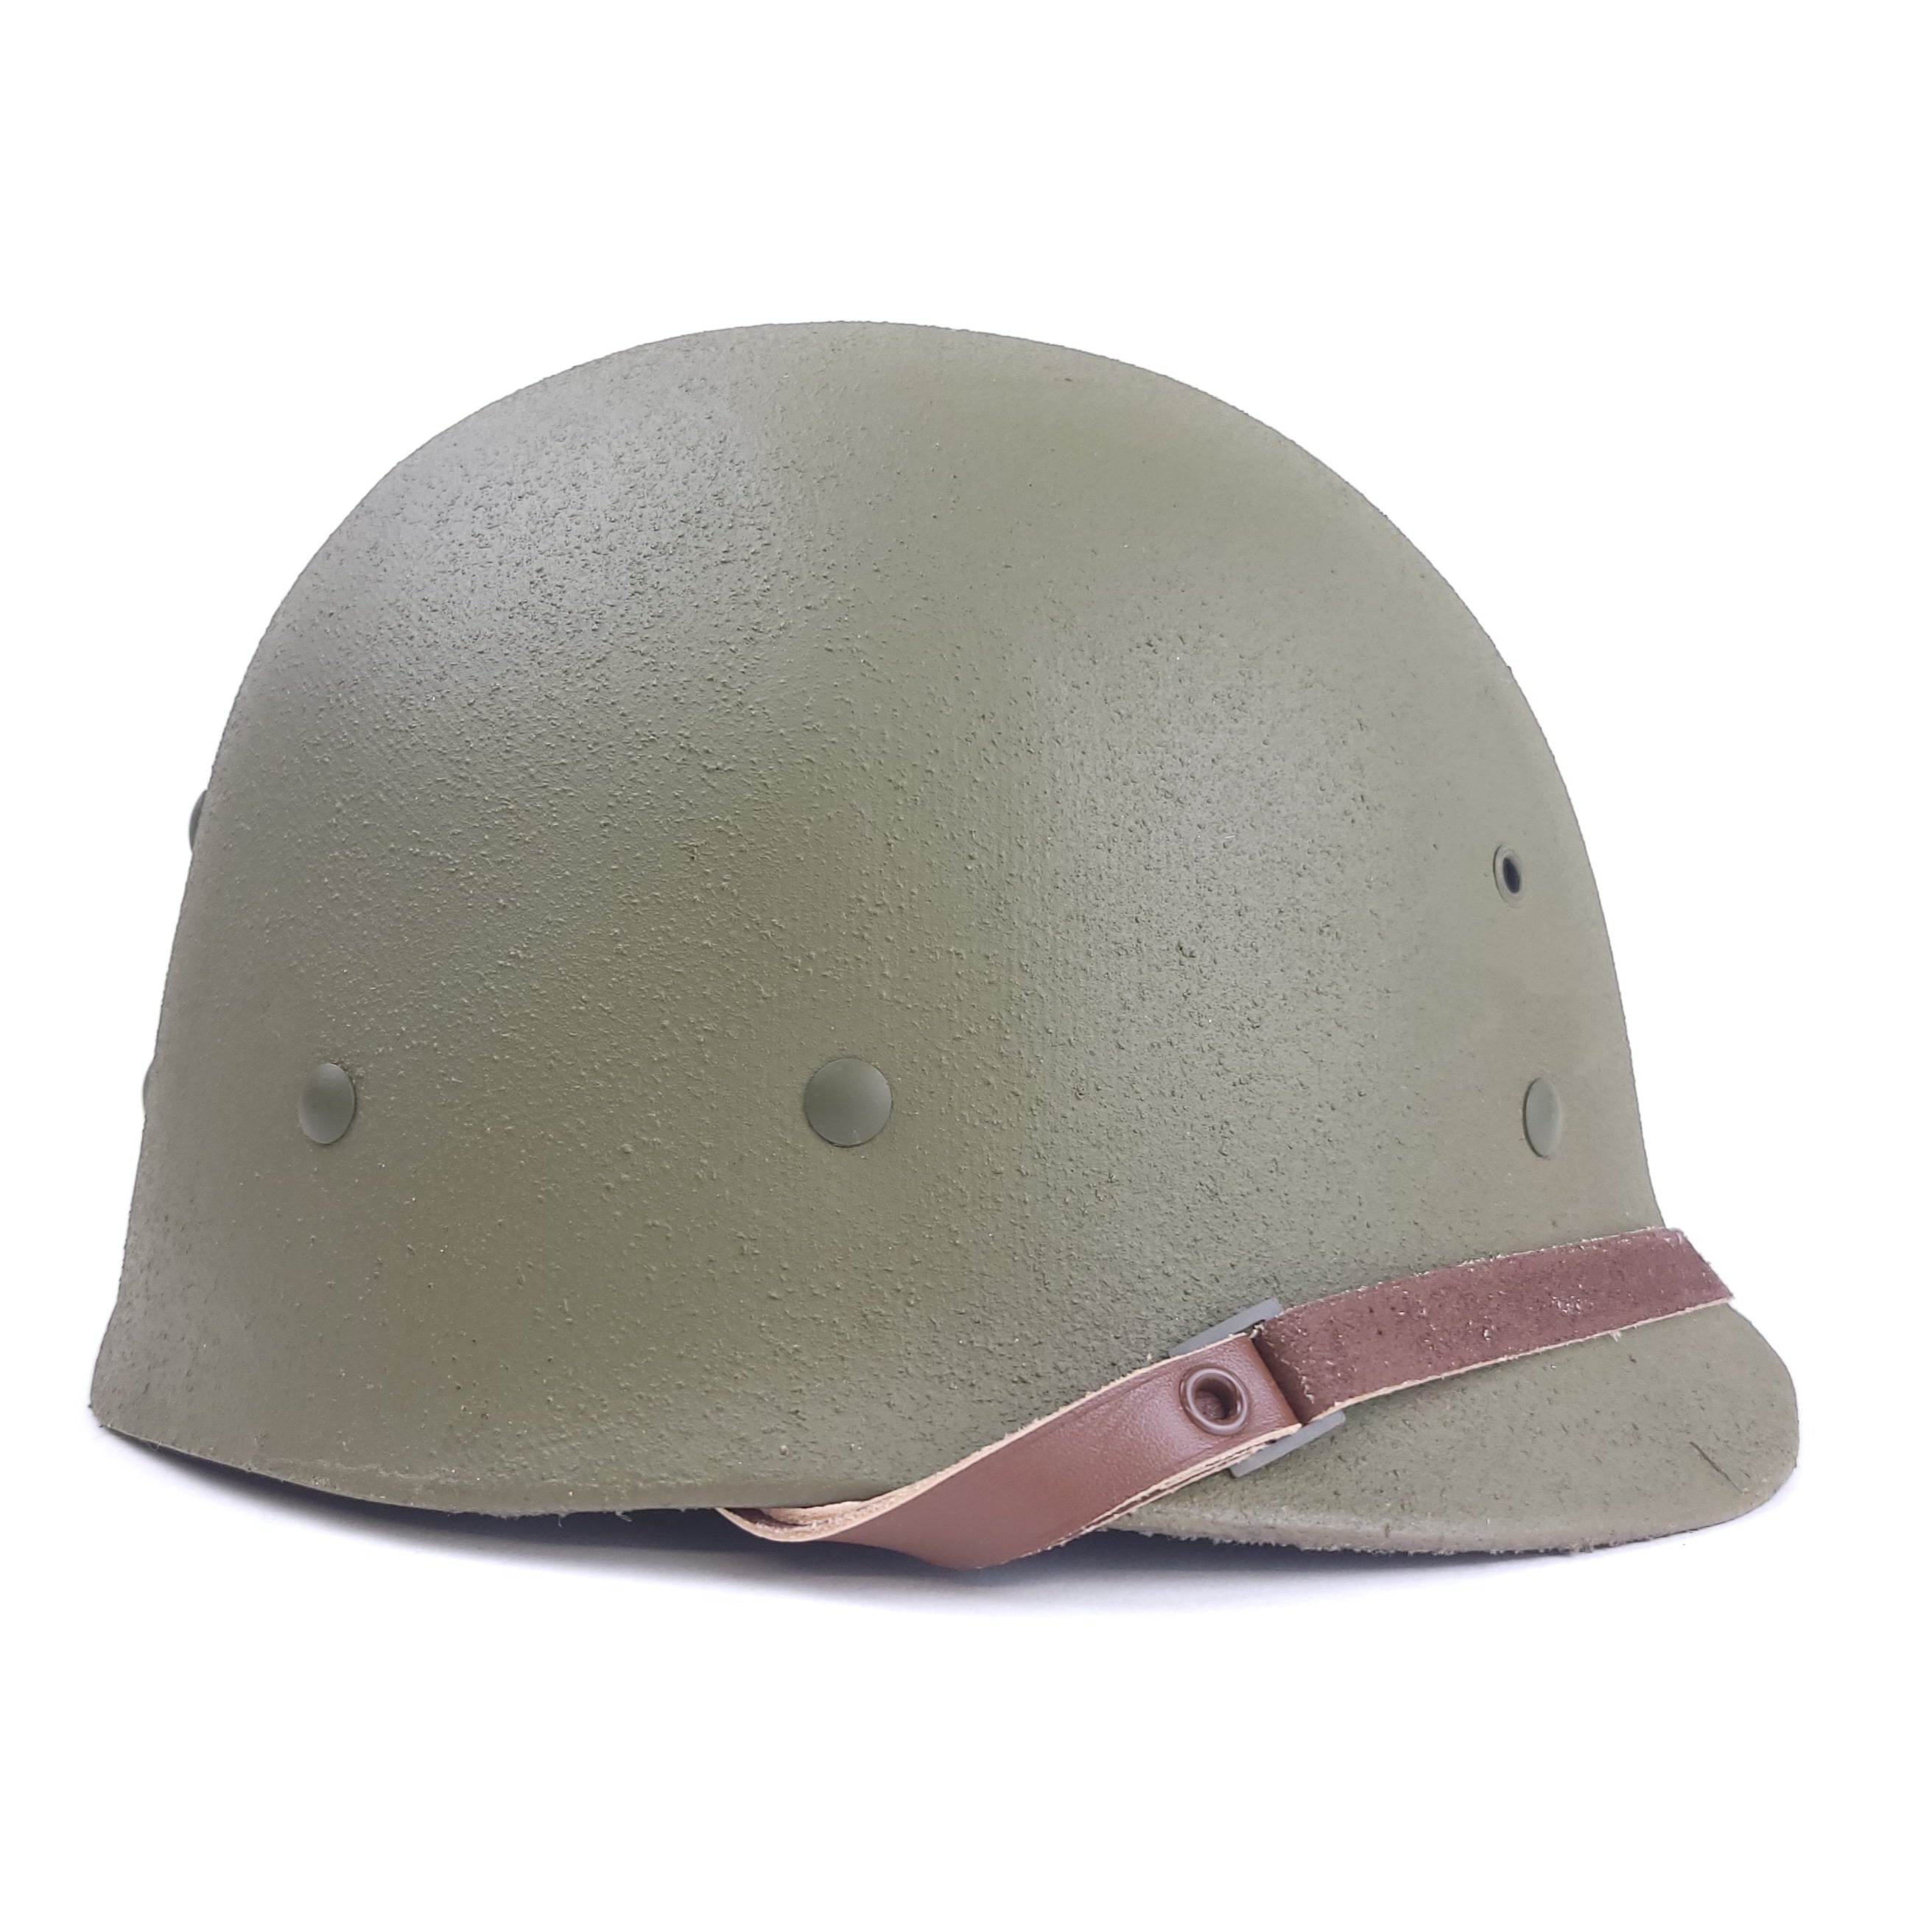 M1 Helmet Liner - St. Clair (Clone) - Rayon Webbed - Rectangular Washer Version